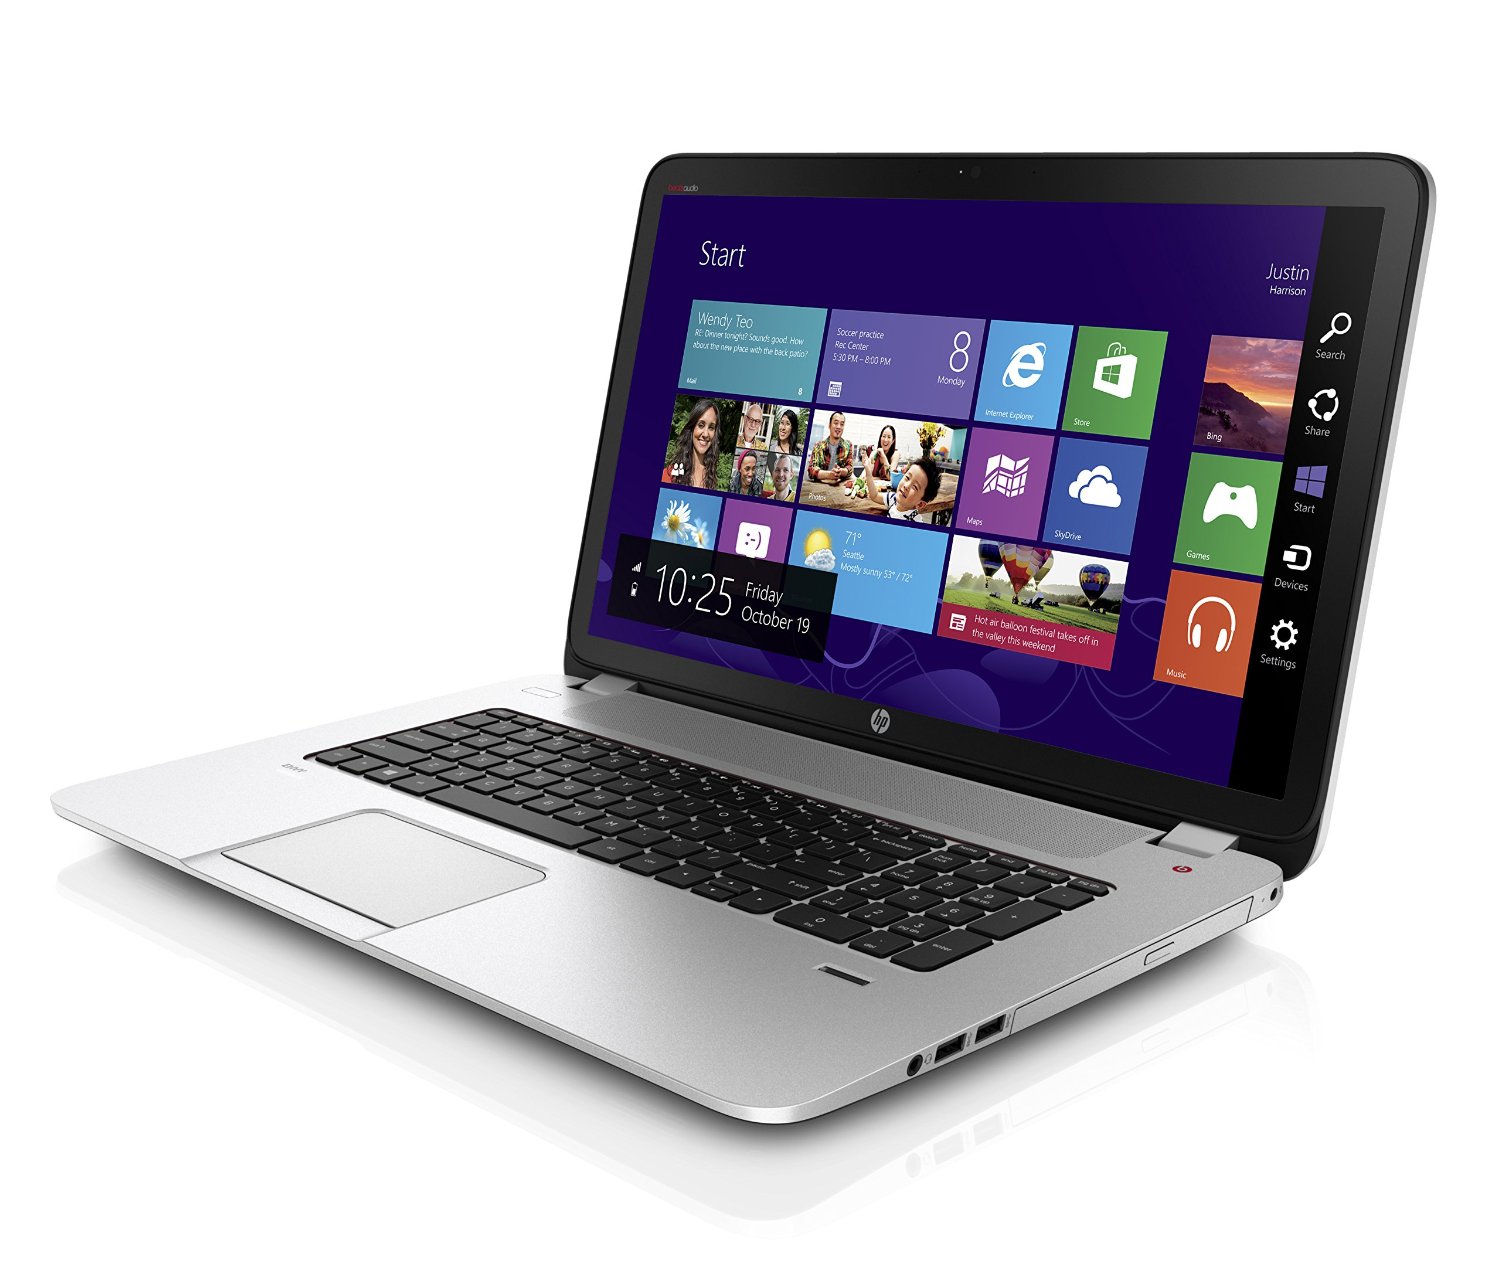 HP ENVY 17-j140us 17.3-Inch Laptop